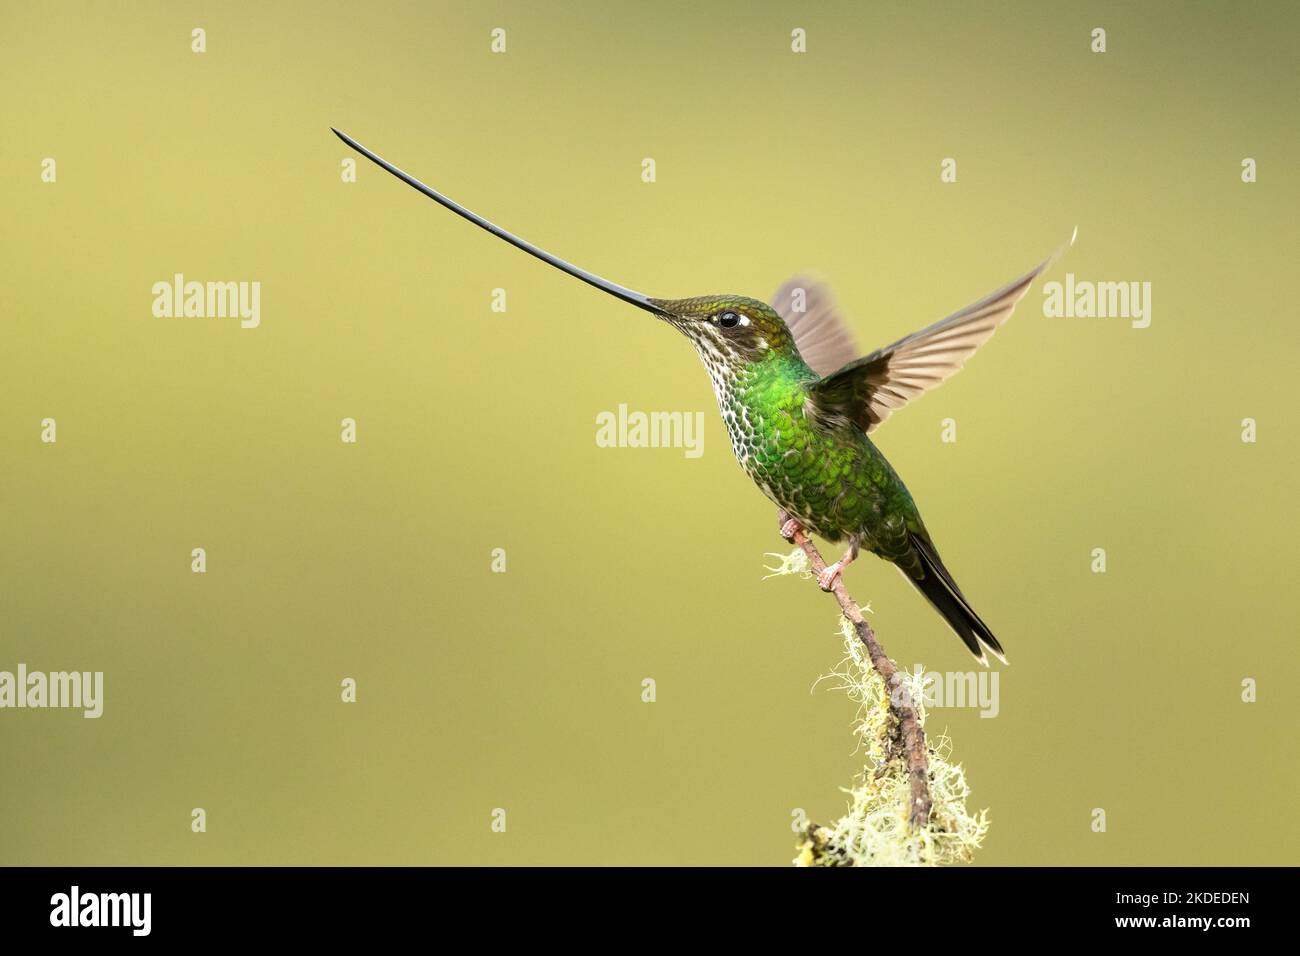 Sword-billed hummingbird Stock Photo